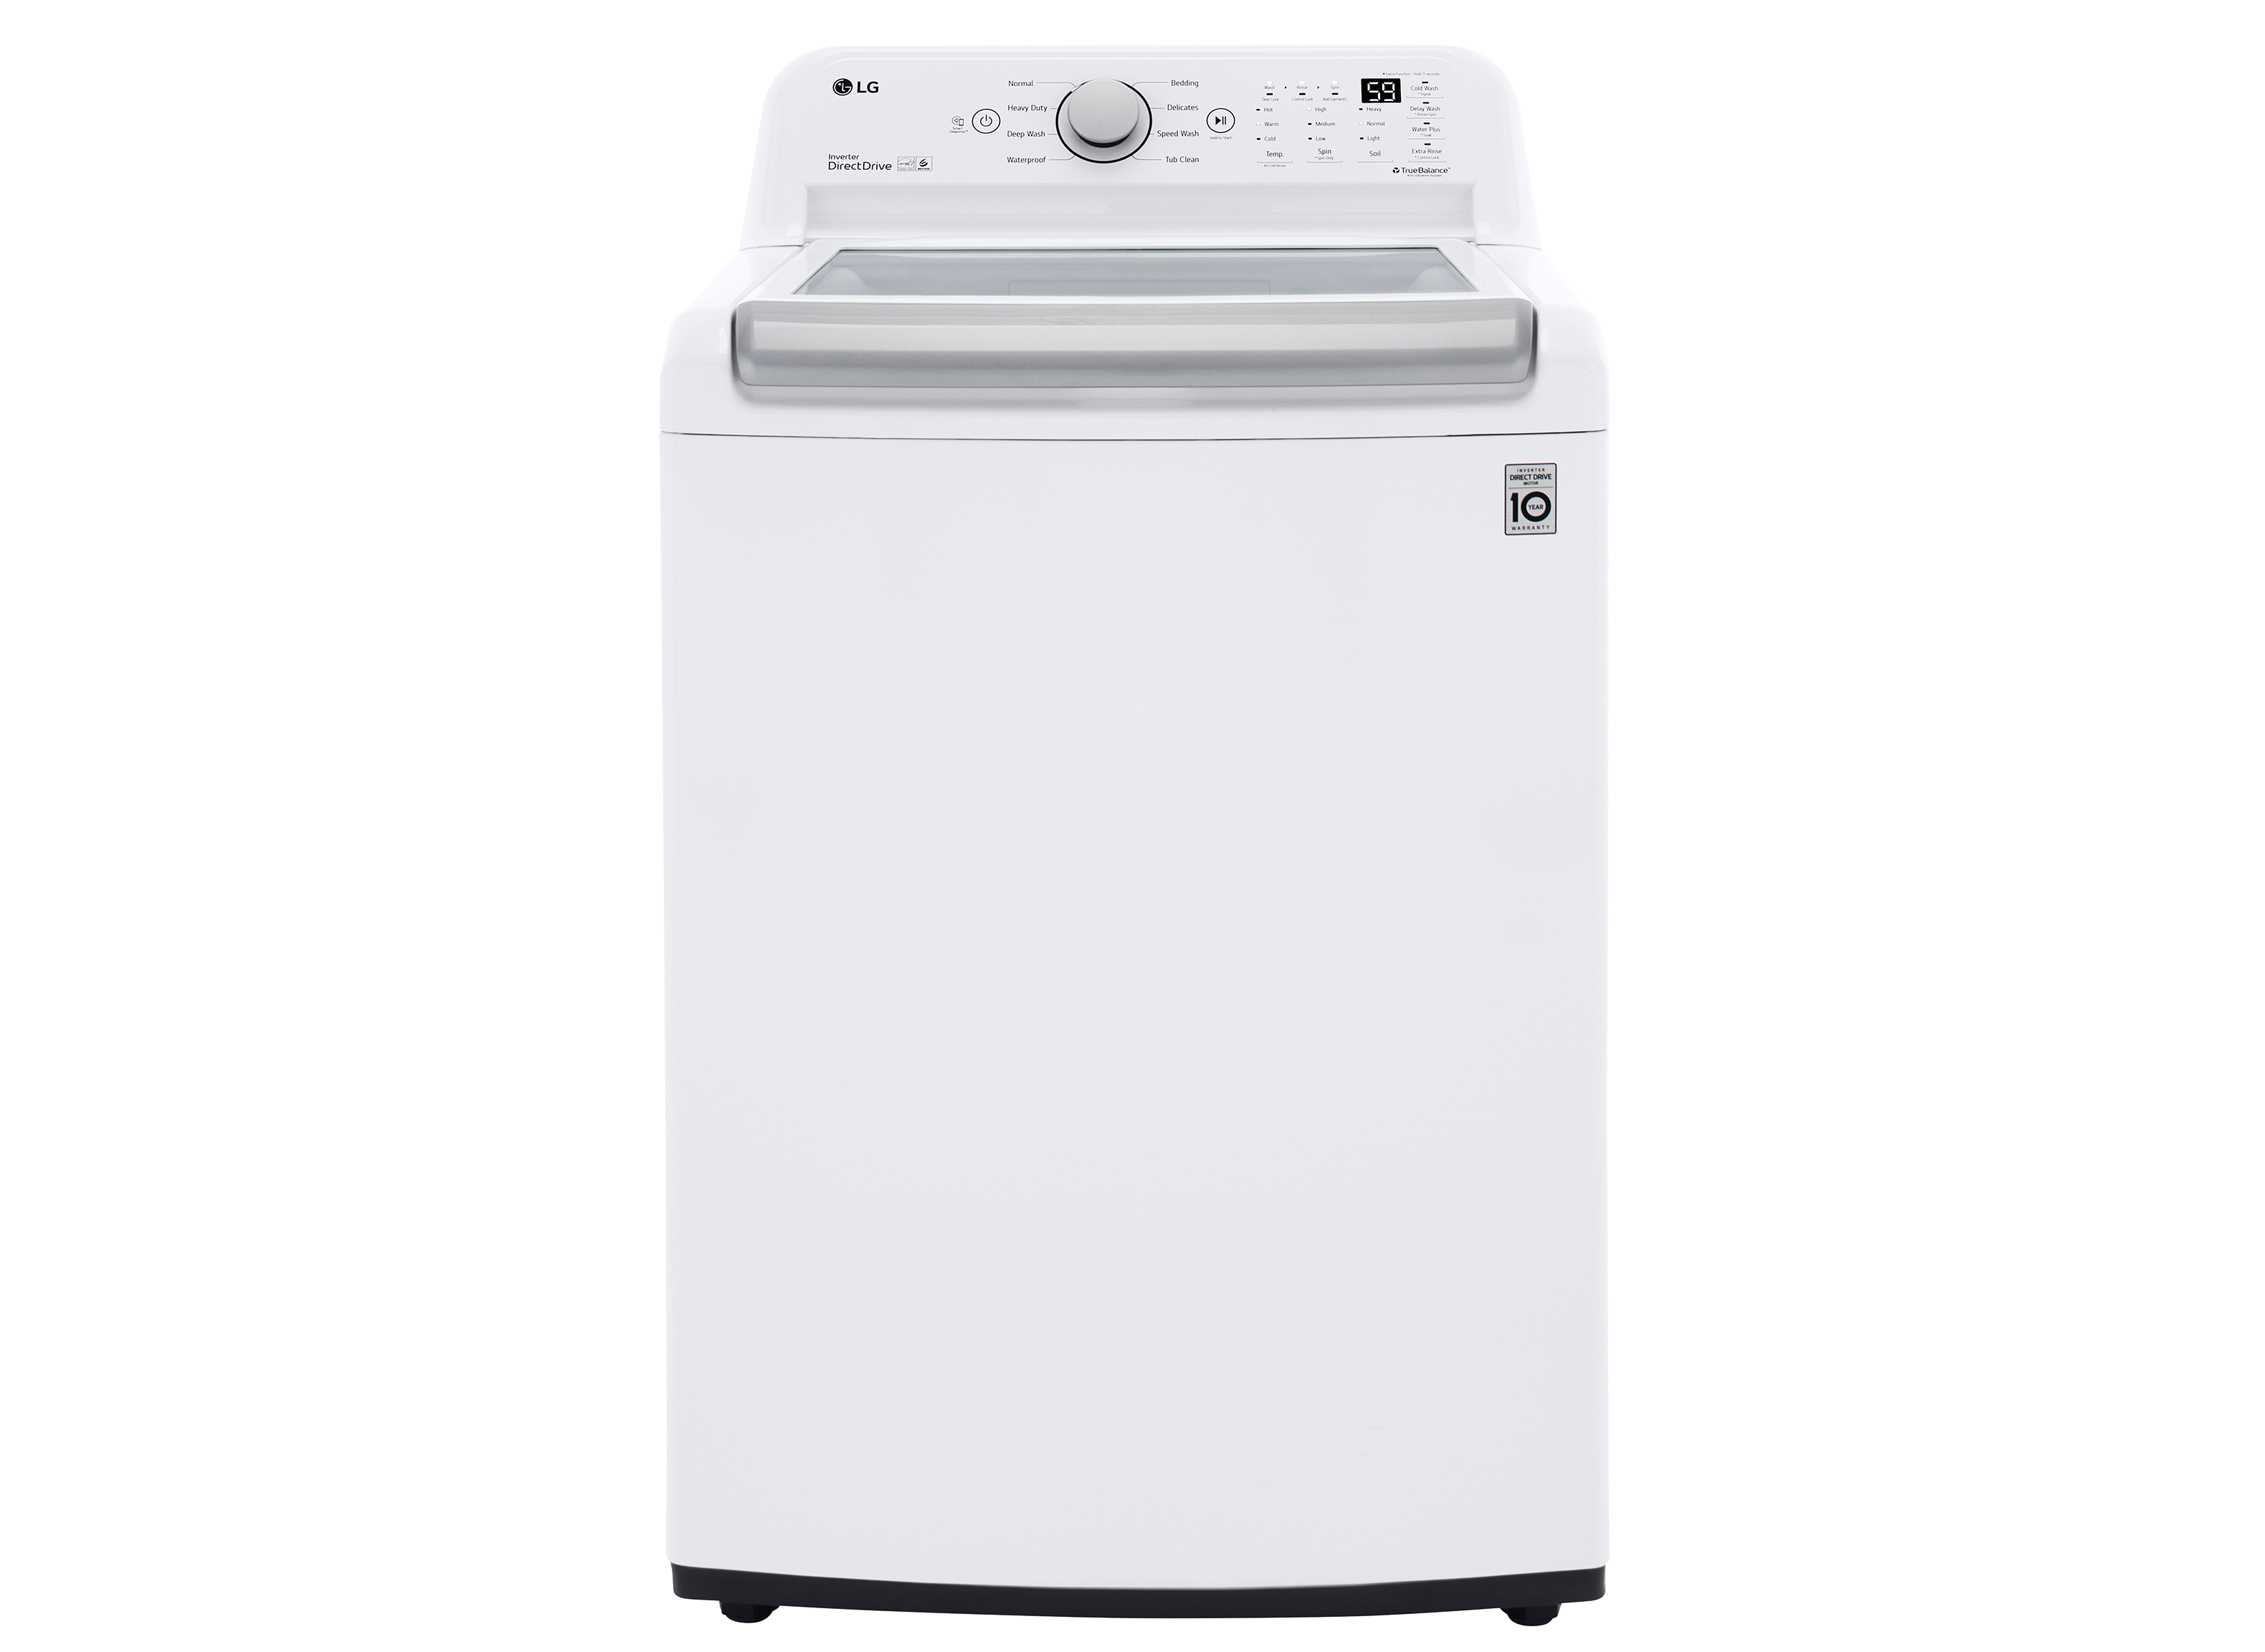 LG WT7150CW Top Load Washer & DLG7151W GAS Dryer